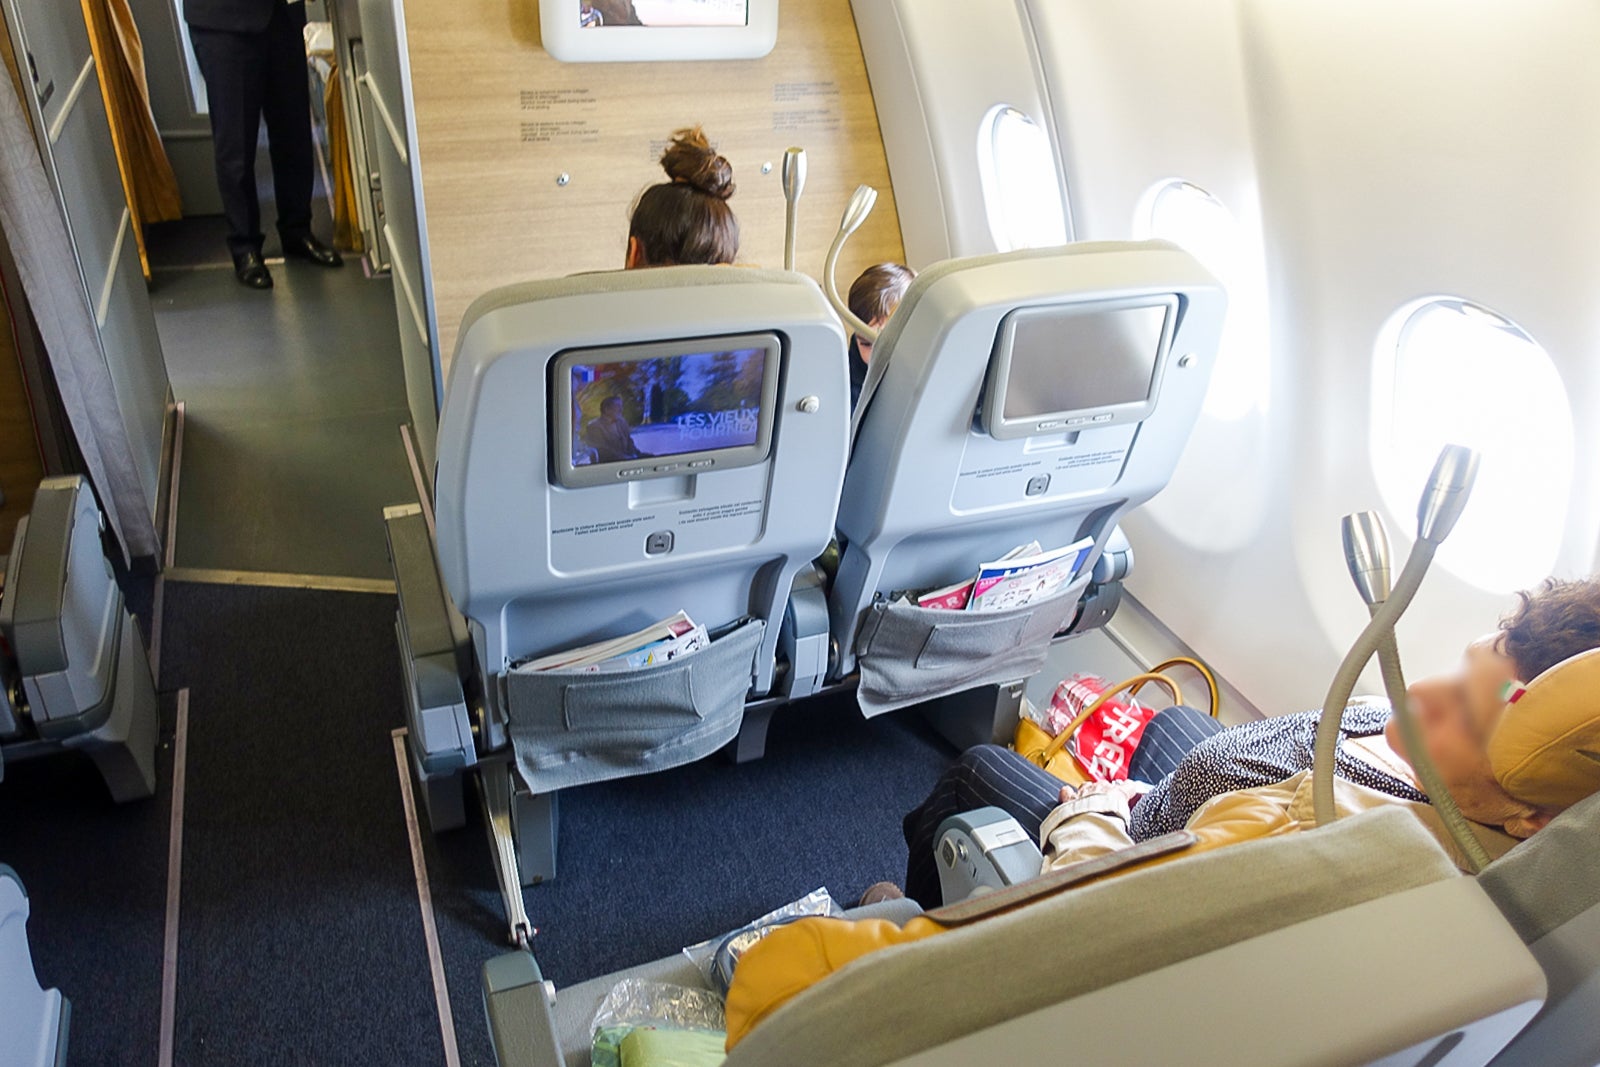 ITA Airways A330-900neo Premium Economy Review [GRU-FCO]